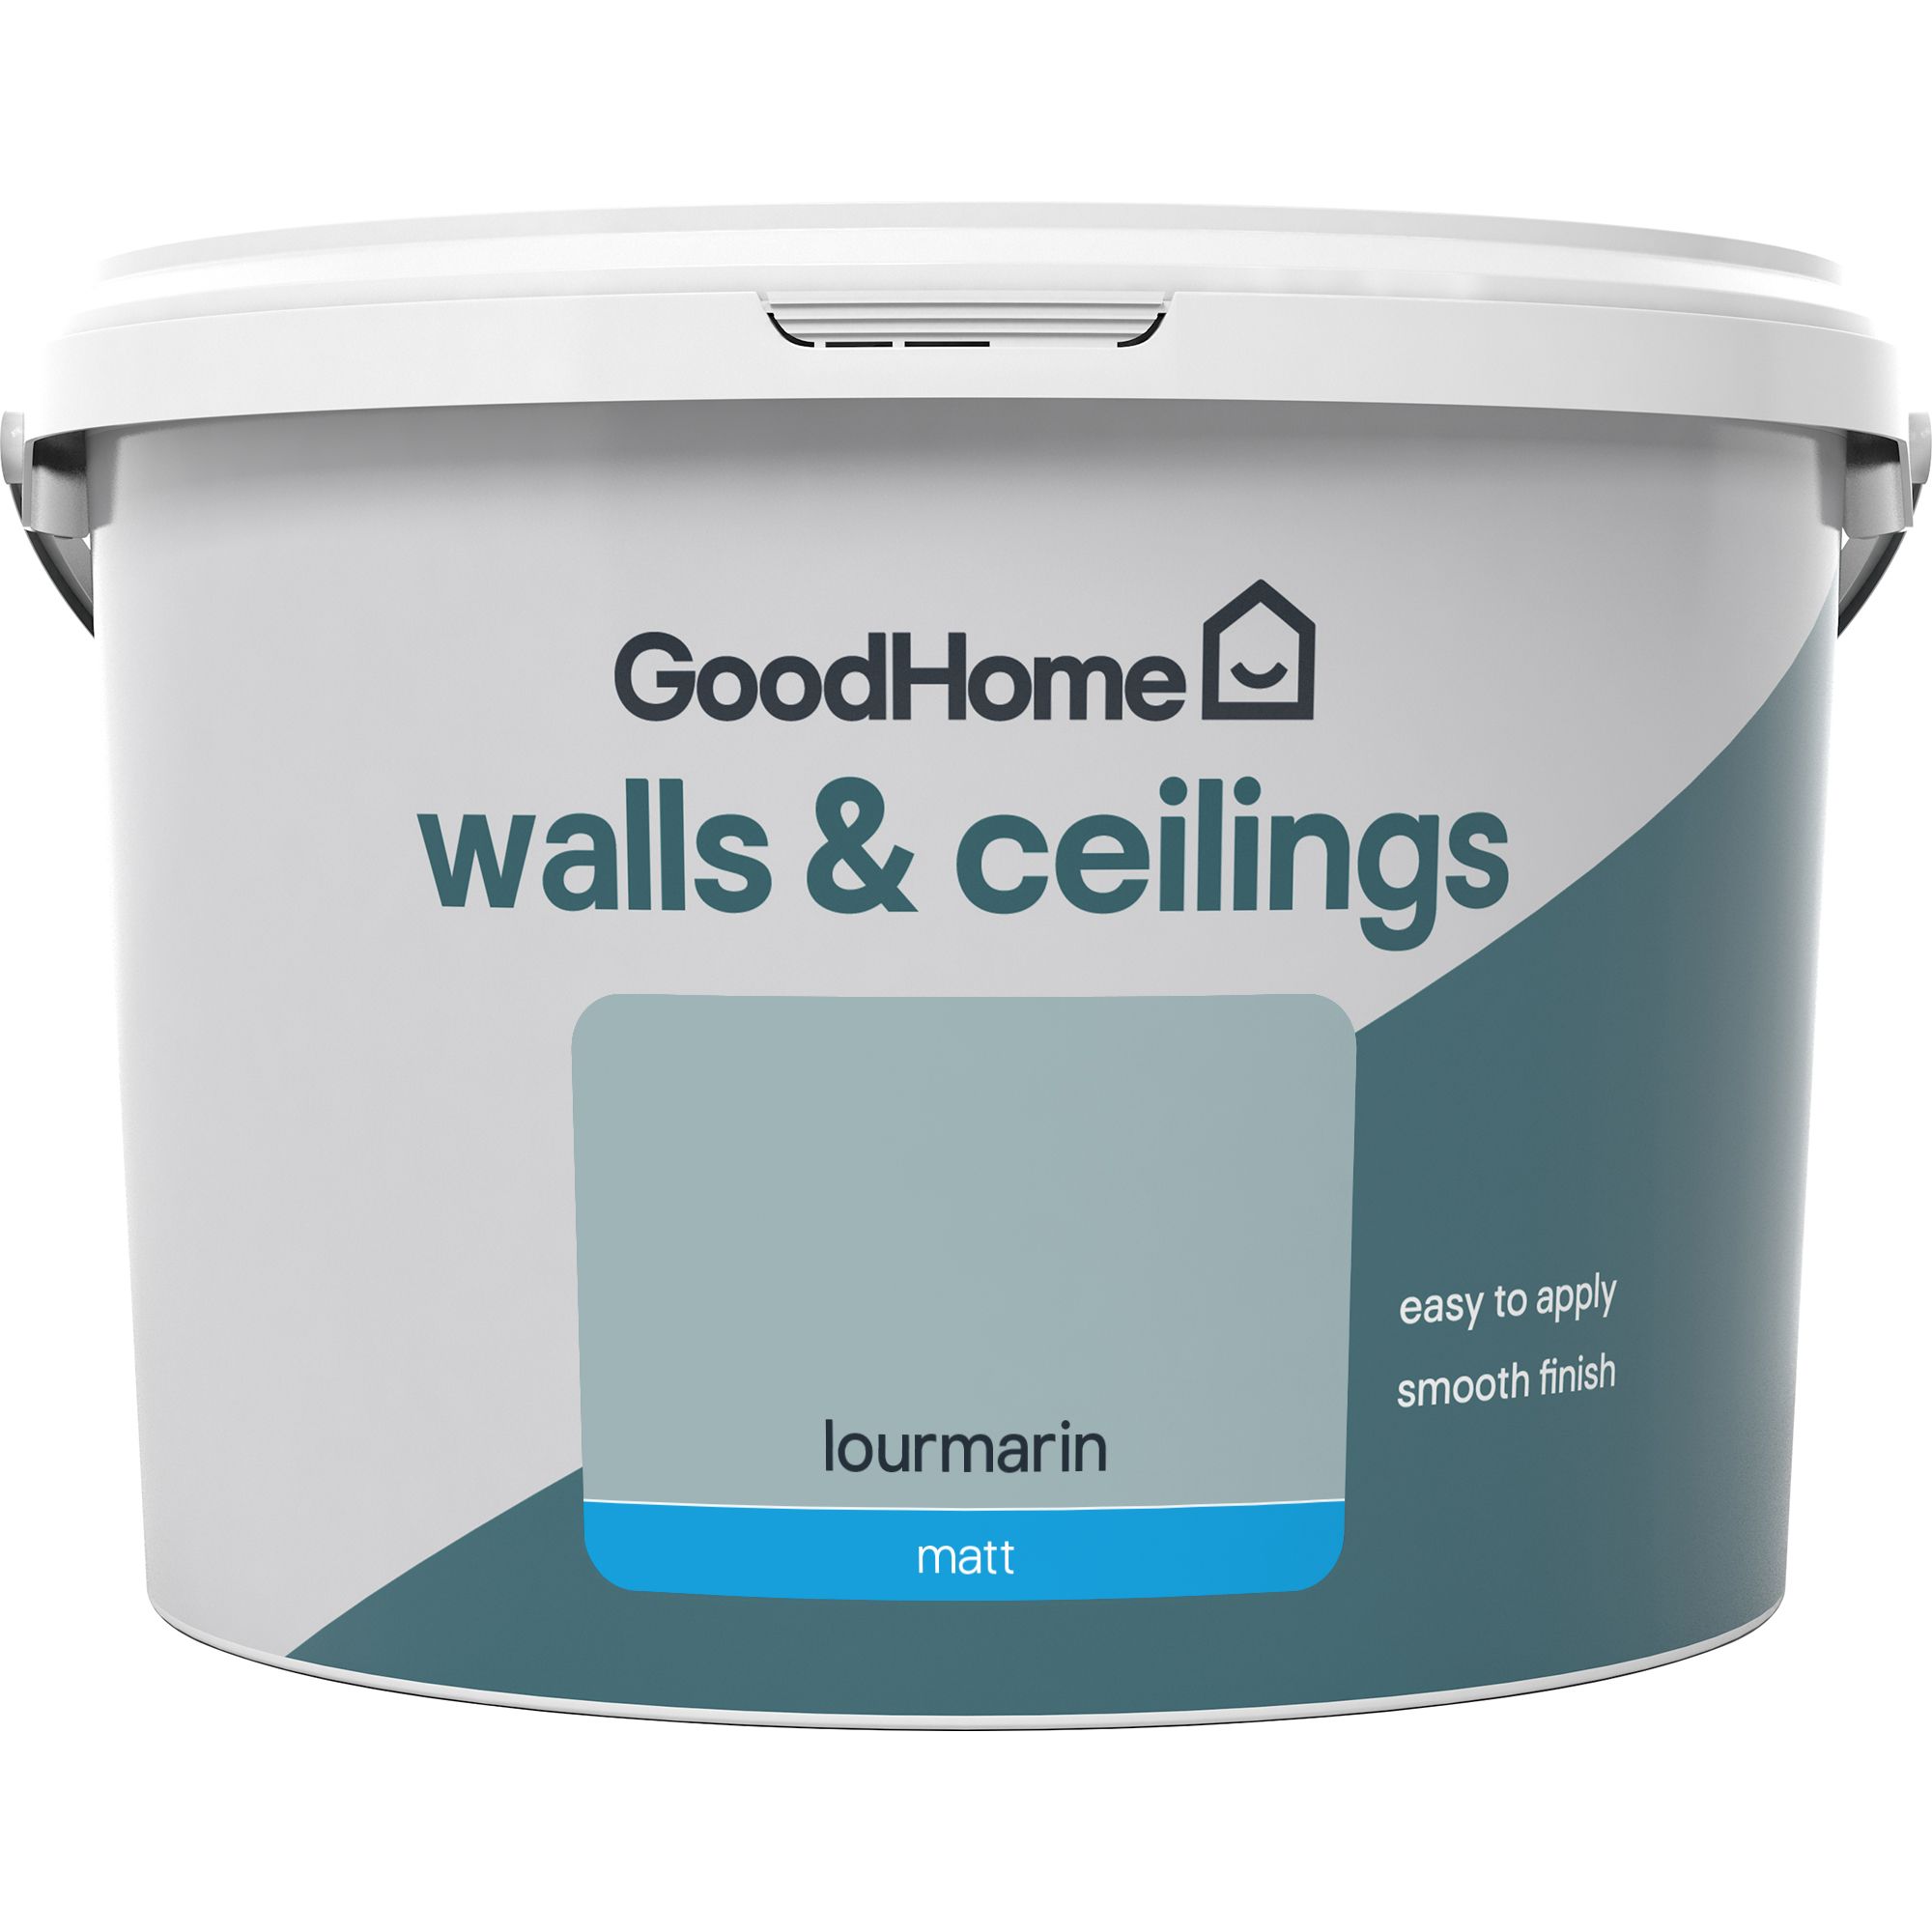 GoodHome Walls & ceilings Lourmarin Matt Emulsion paint, 2.5L